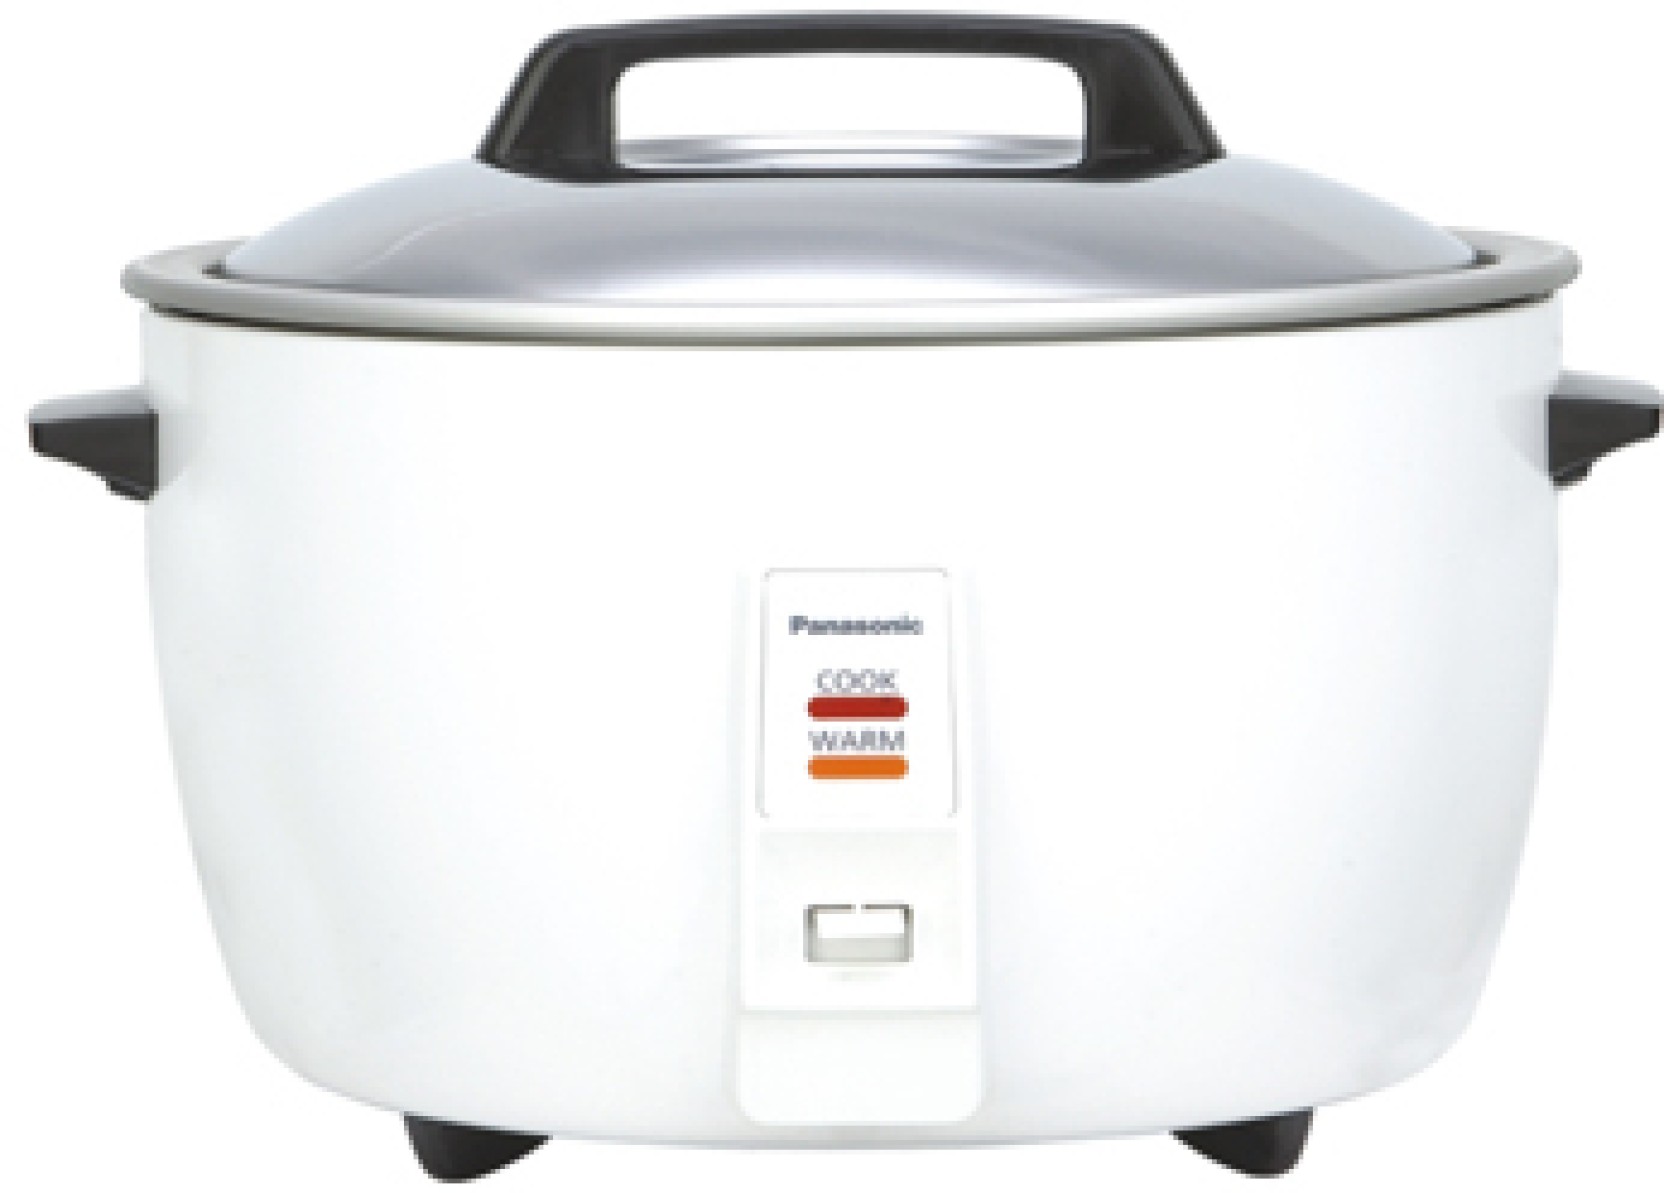 Panasonic SR942D Electric Rice Cooker Price in India - Buy Panasonic ...